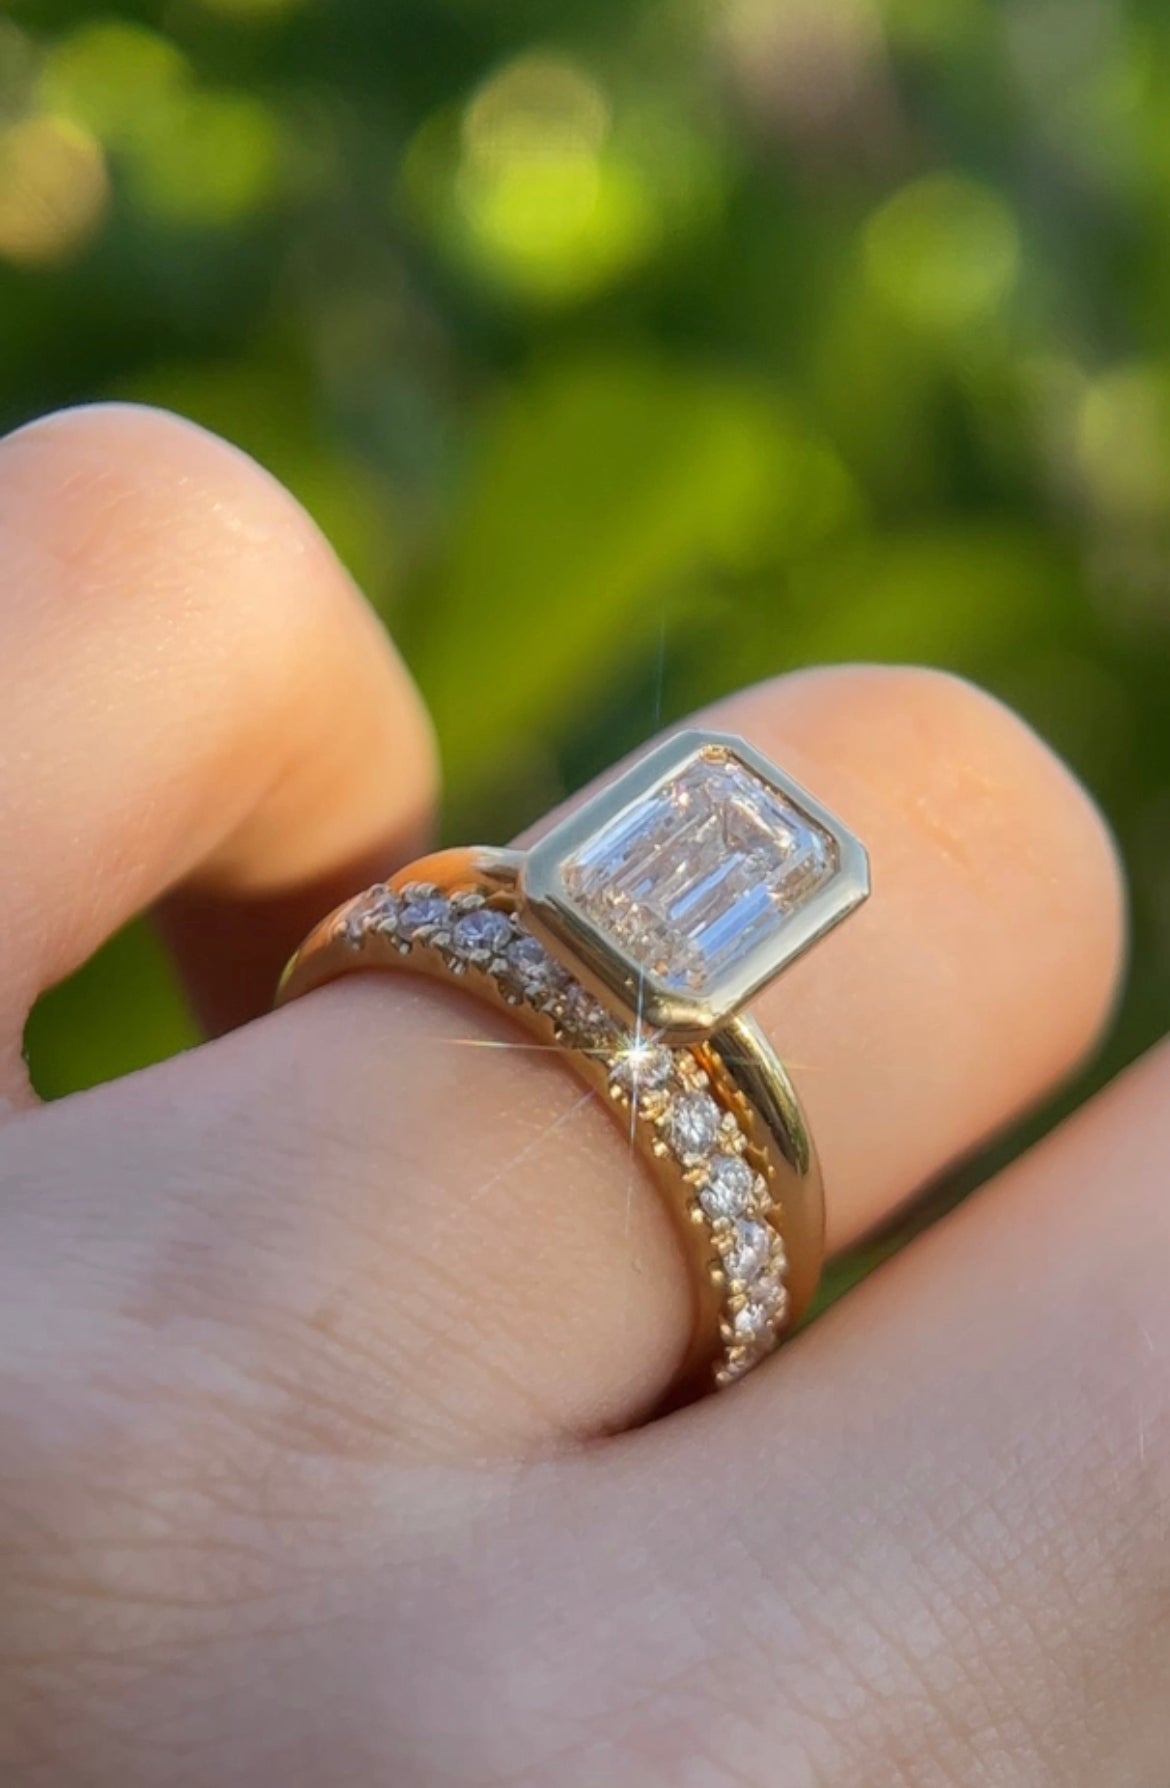 Bezel-set engagement ring with a diamond wedding ring